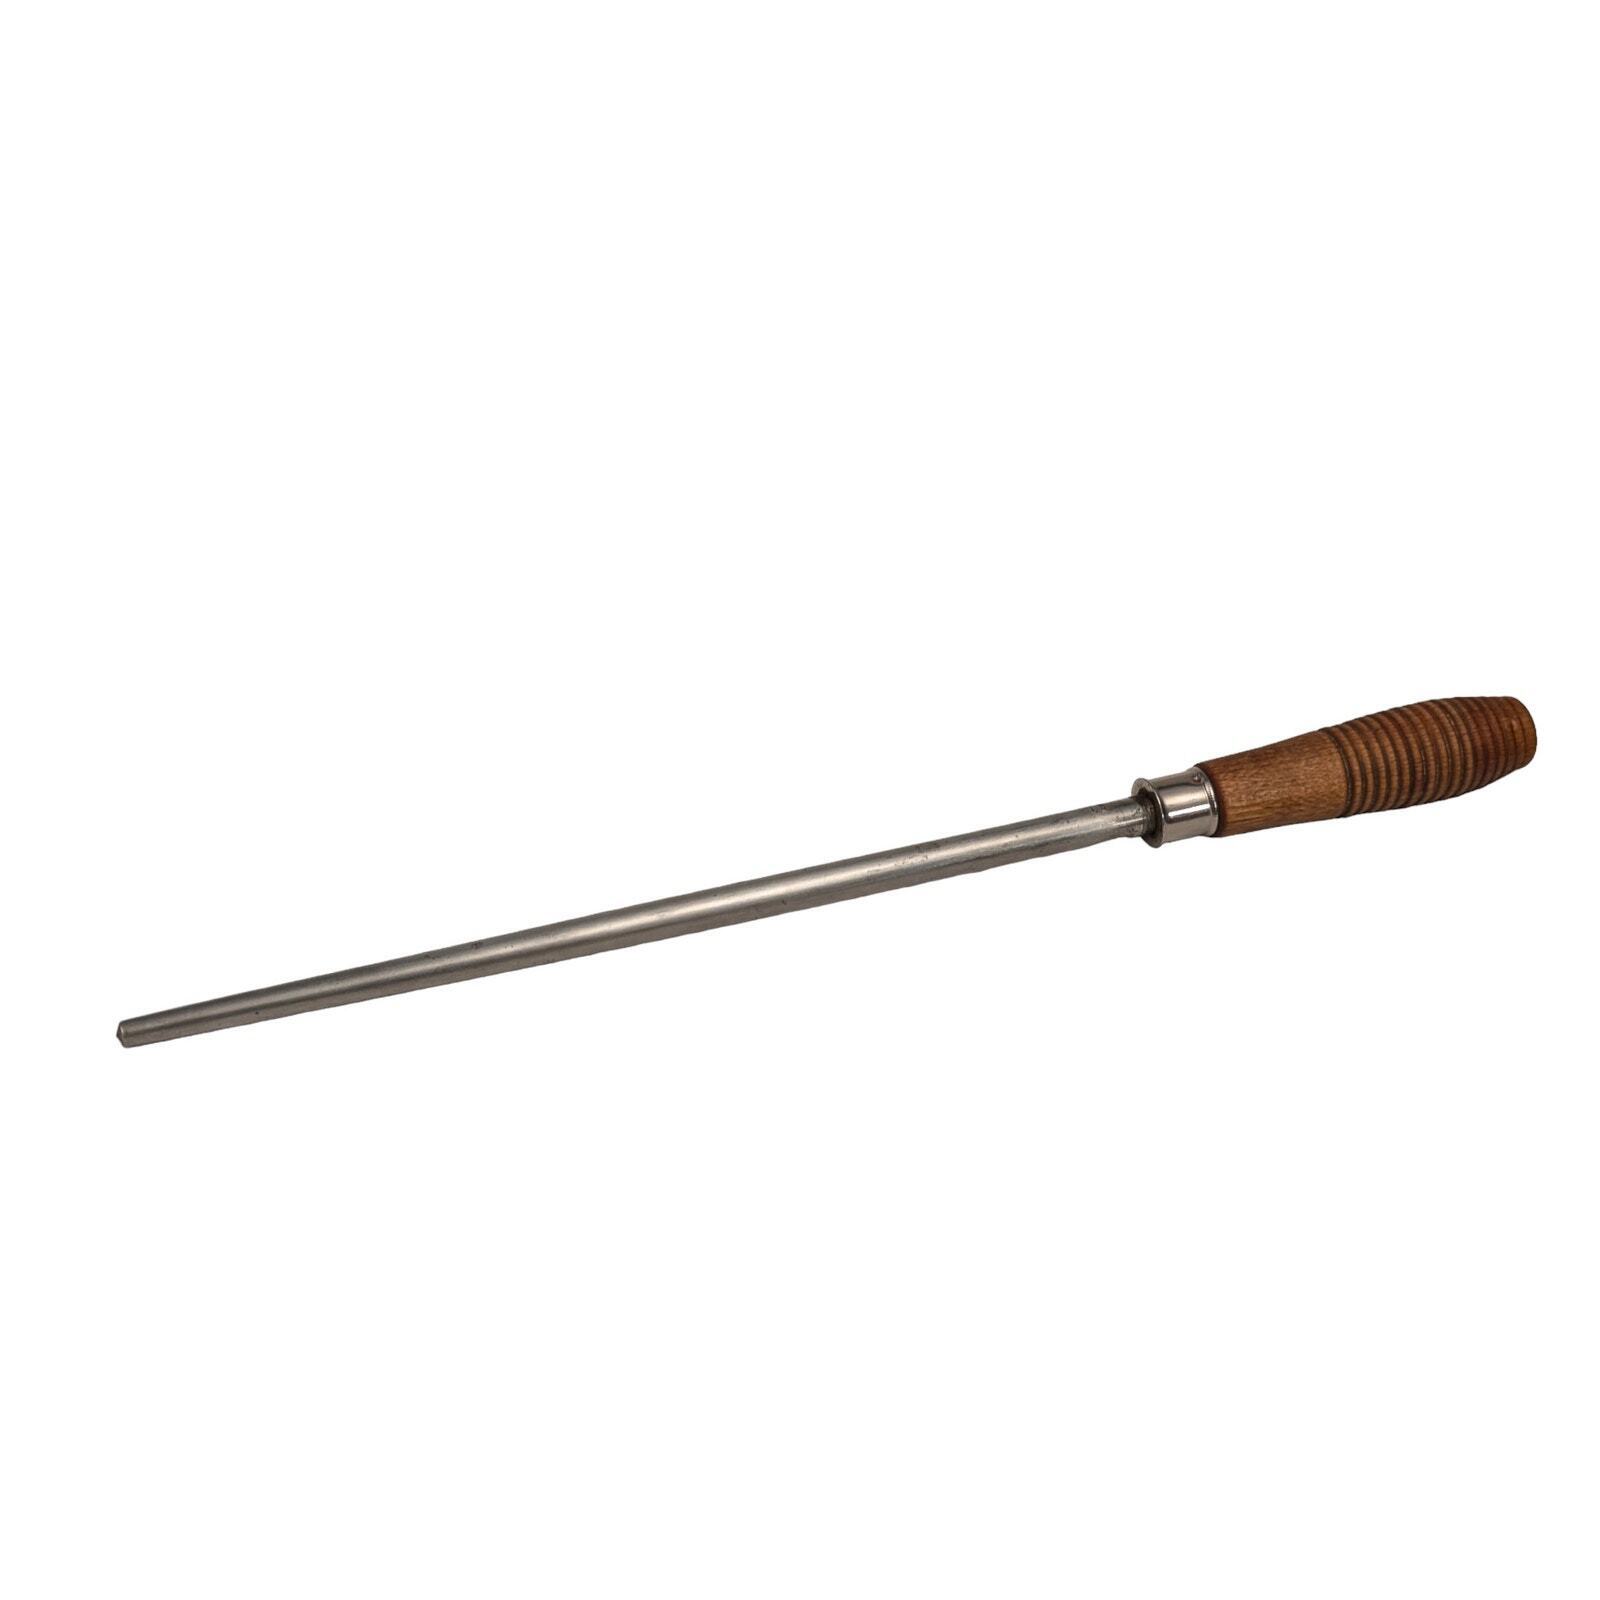 Vintage Russell Green River Works knife sharpener steel honing rod